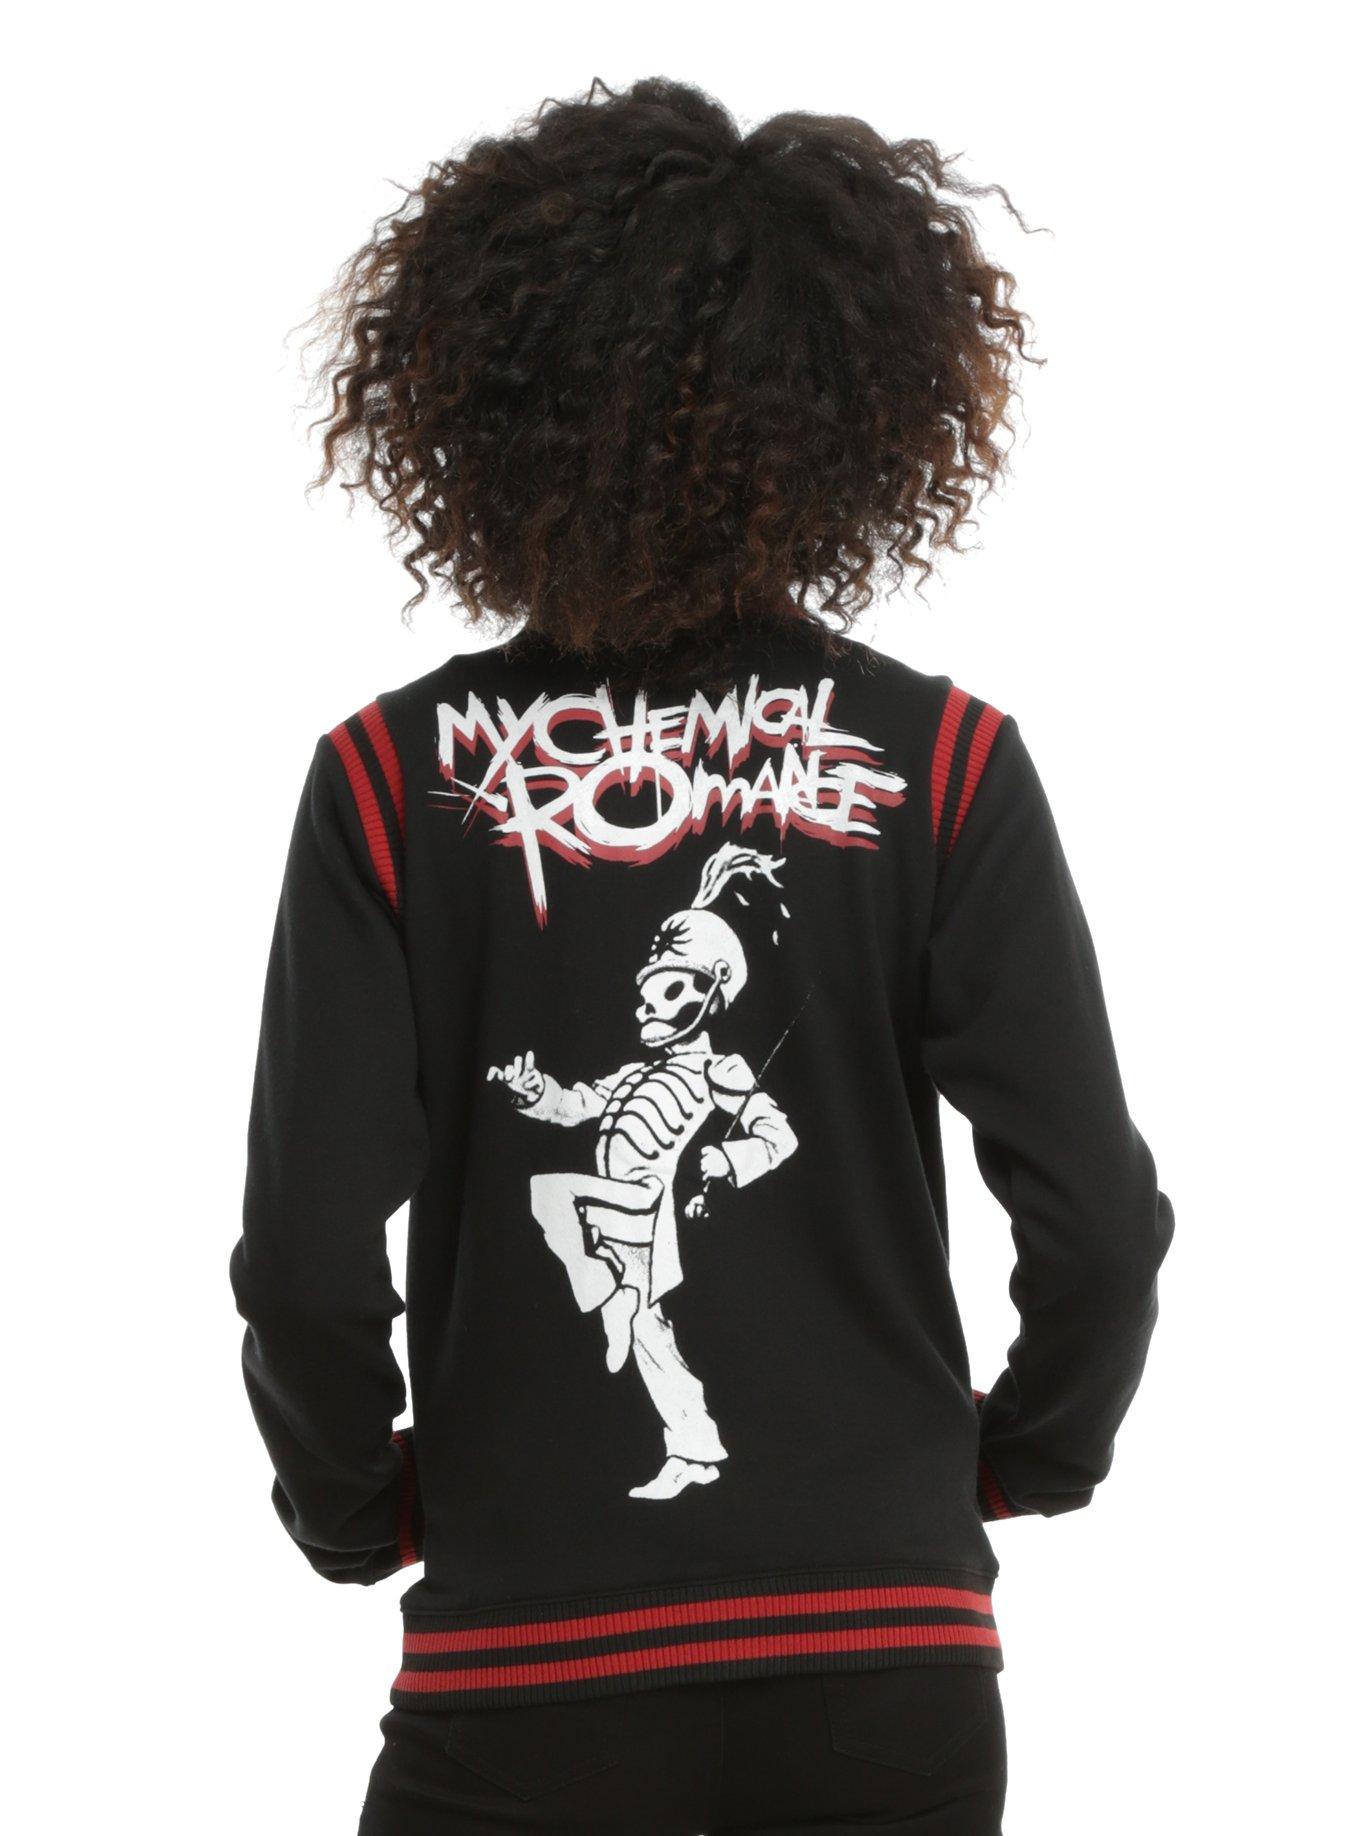 My Chemical Romance Black Parade Girls Varsity Jacket, BLACK, hi-res